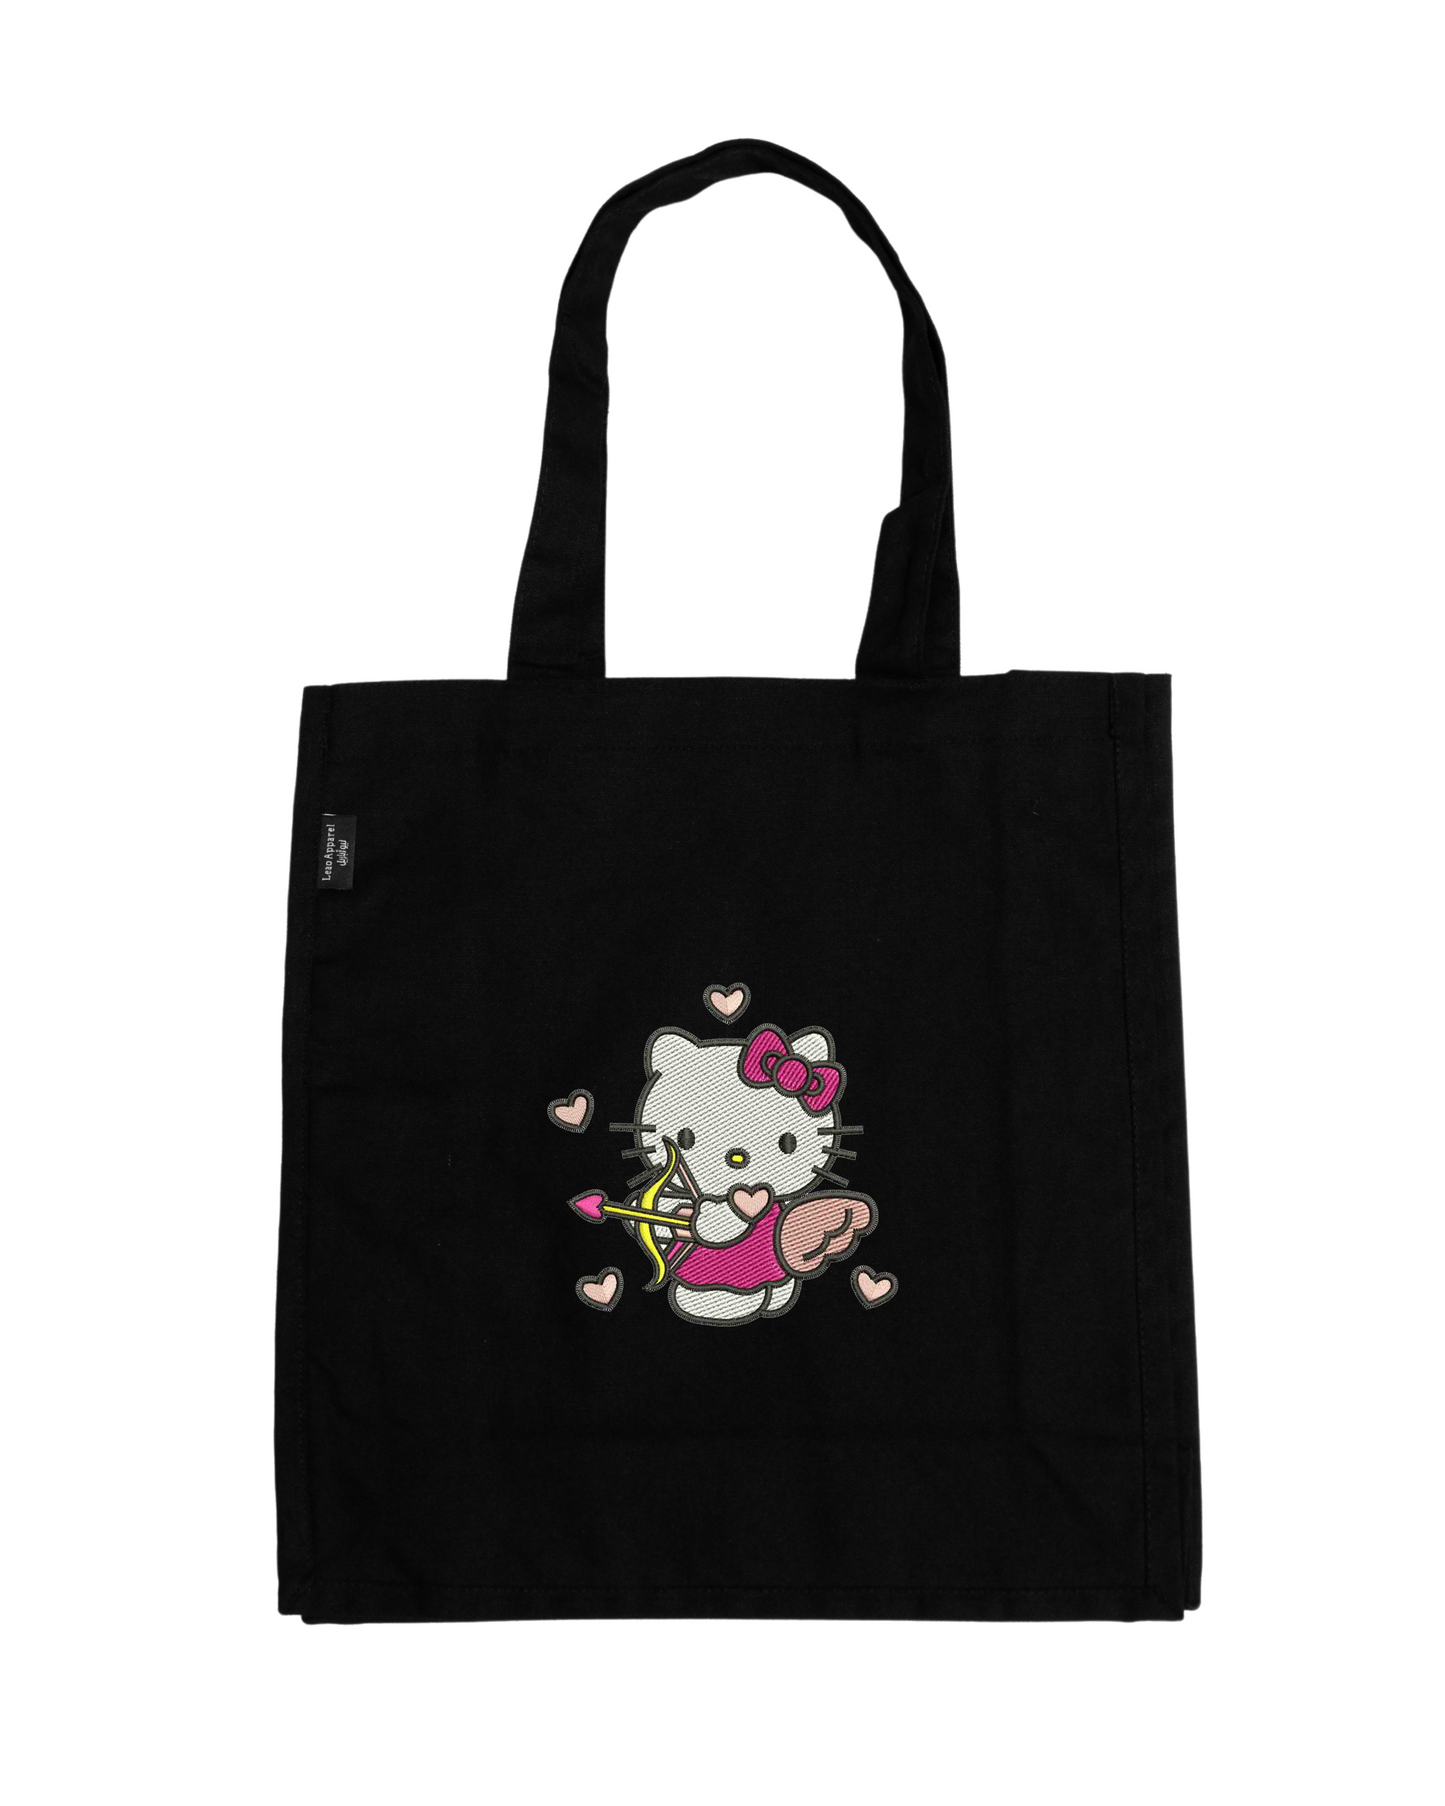 Hello Kitty Tote Bag